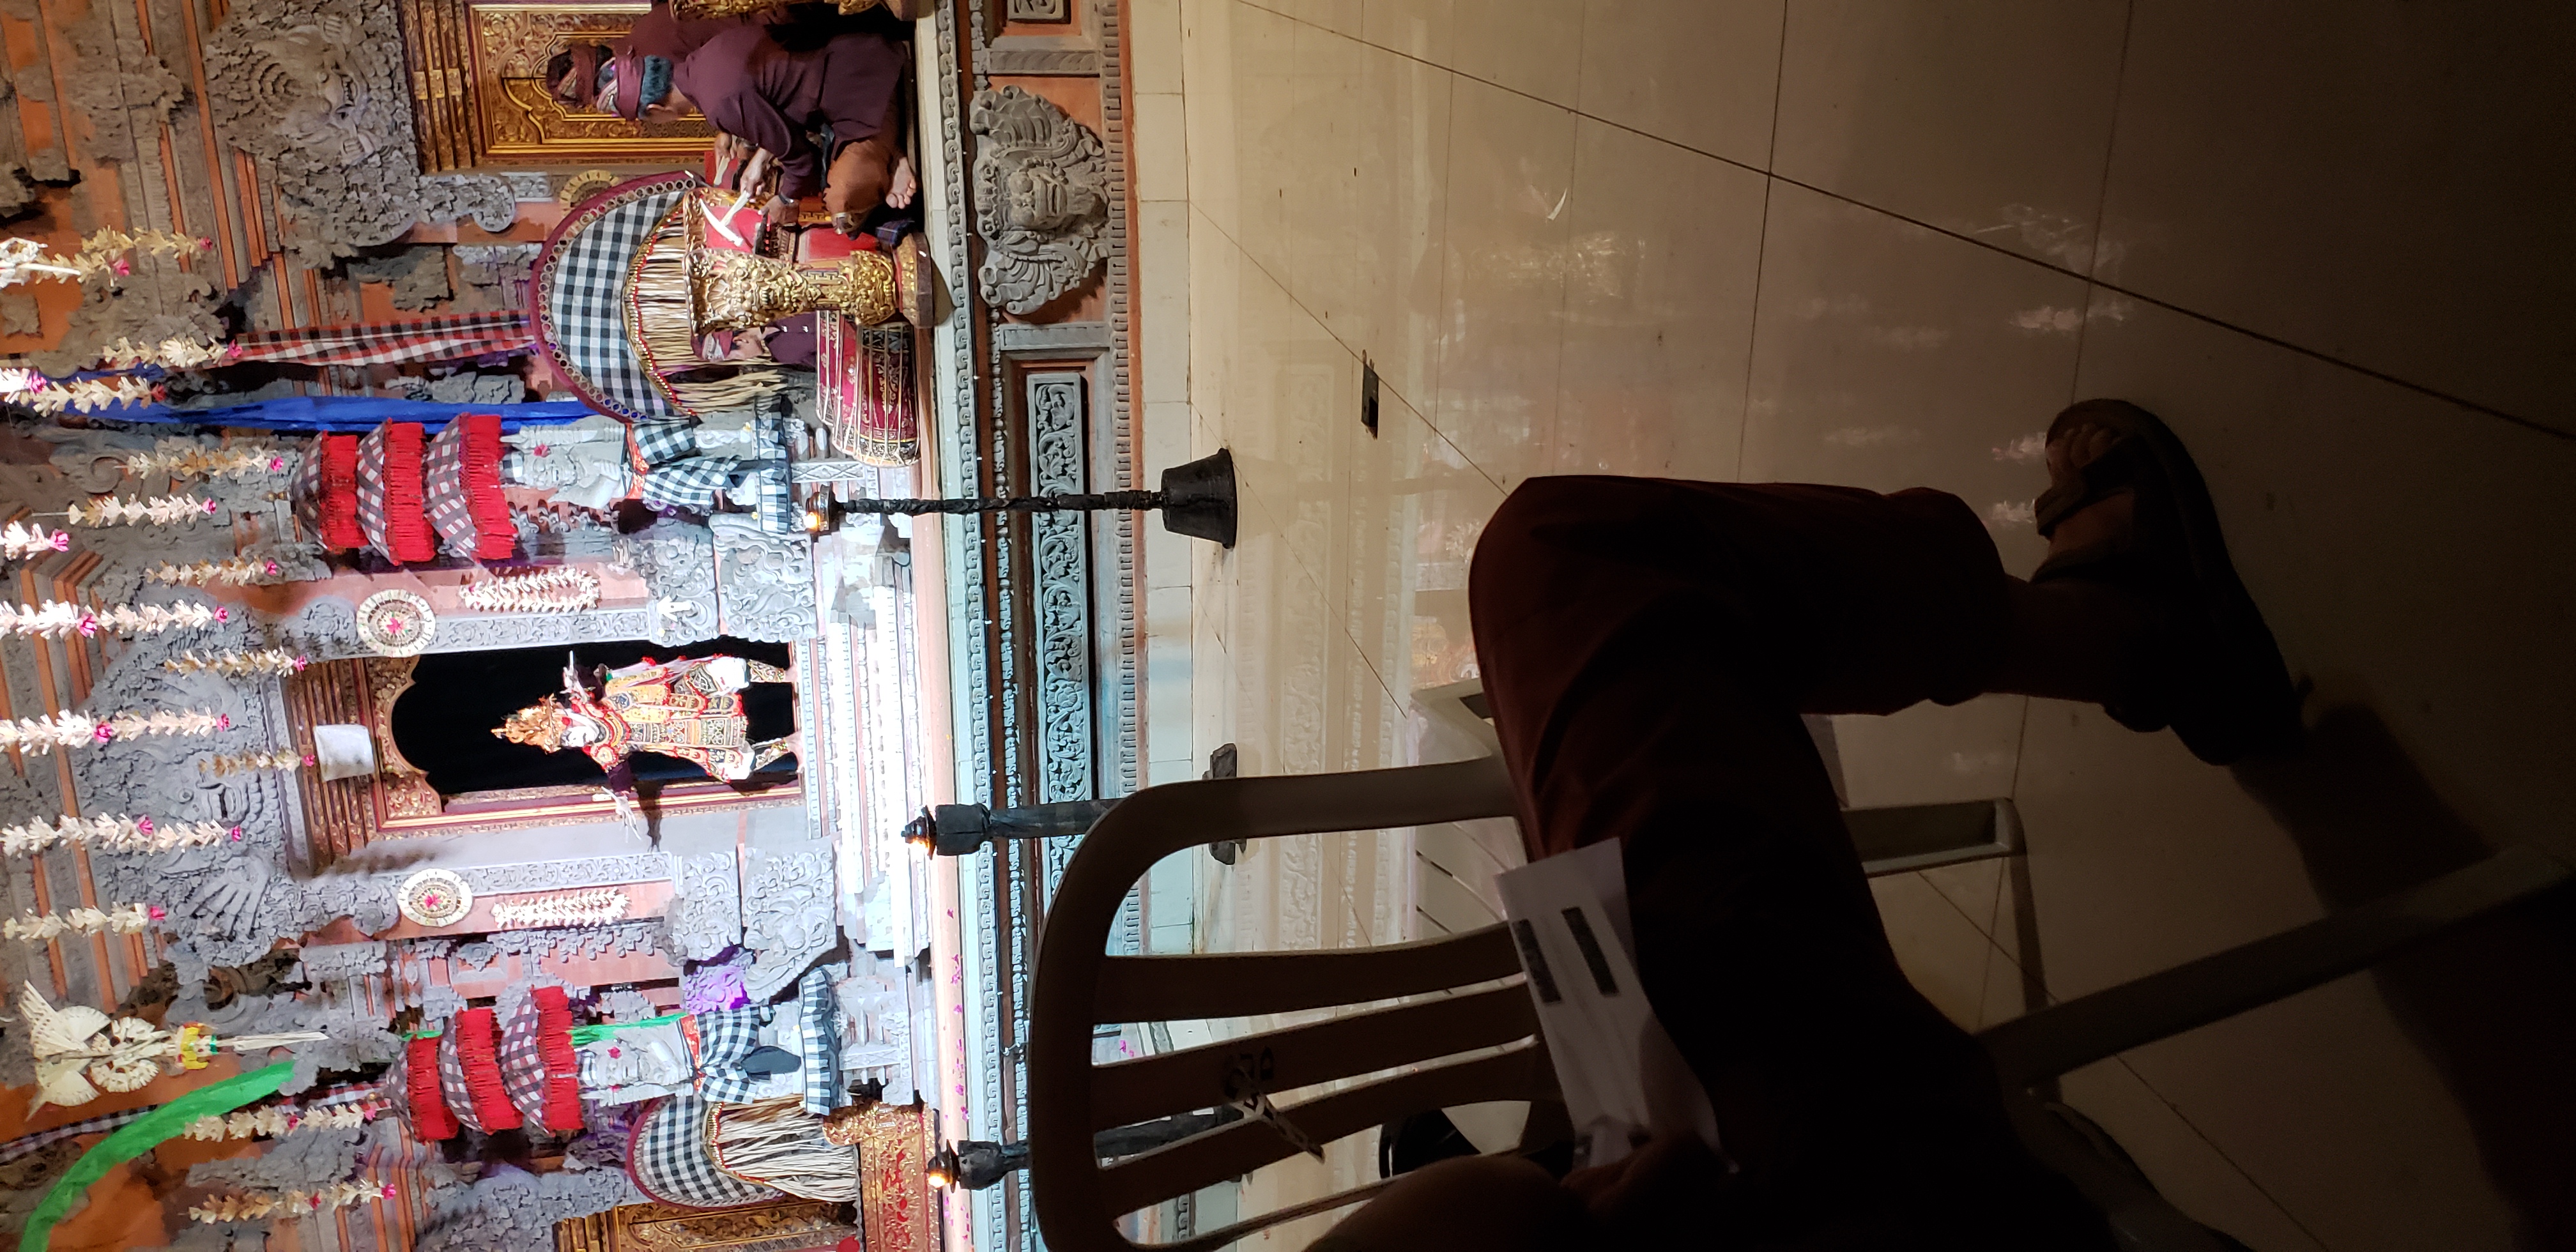 2018 Southeast Asia Trip Day 7 - Ubud, Bali, Indonesia (Dicarik Warung Balinese Cooking Class, Turmeric Stained Hands, Juwuk Manis Rice Fields Walk, Saraswati Temple, Scooter Rides, Wayan's Homemade Balinese Meal, Legong and Barong Dance Pura Dalem Ubud)